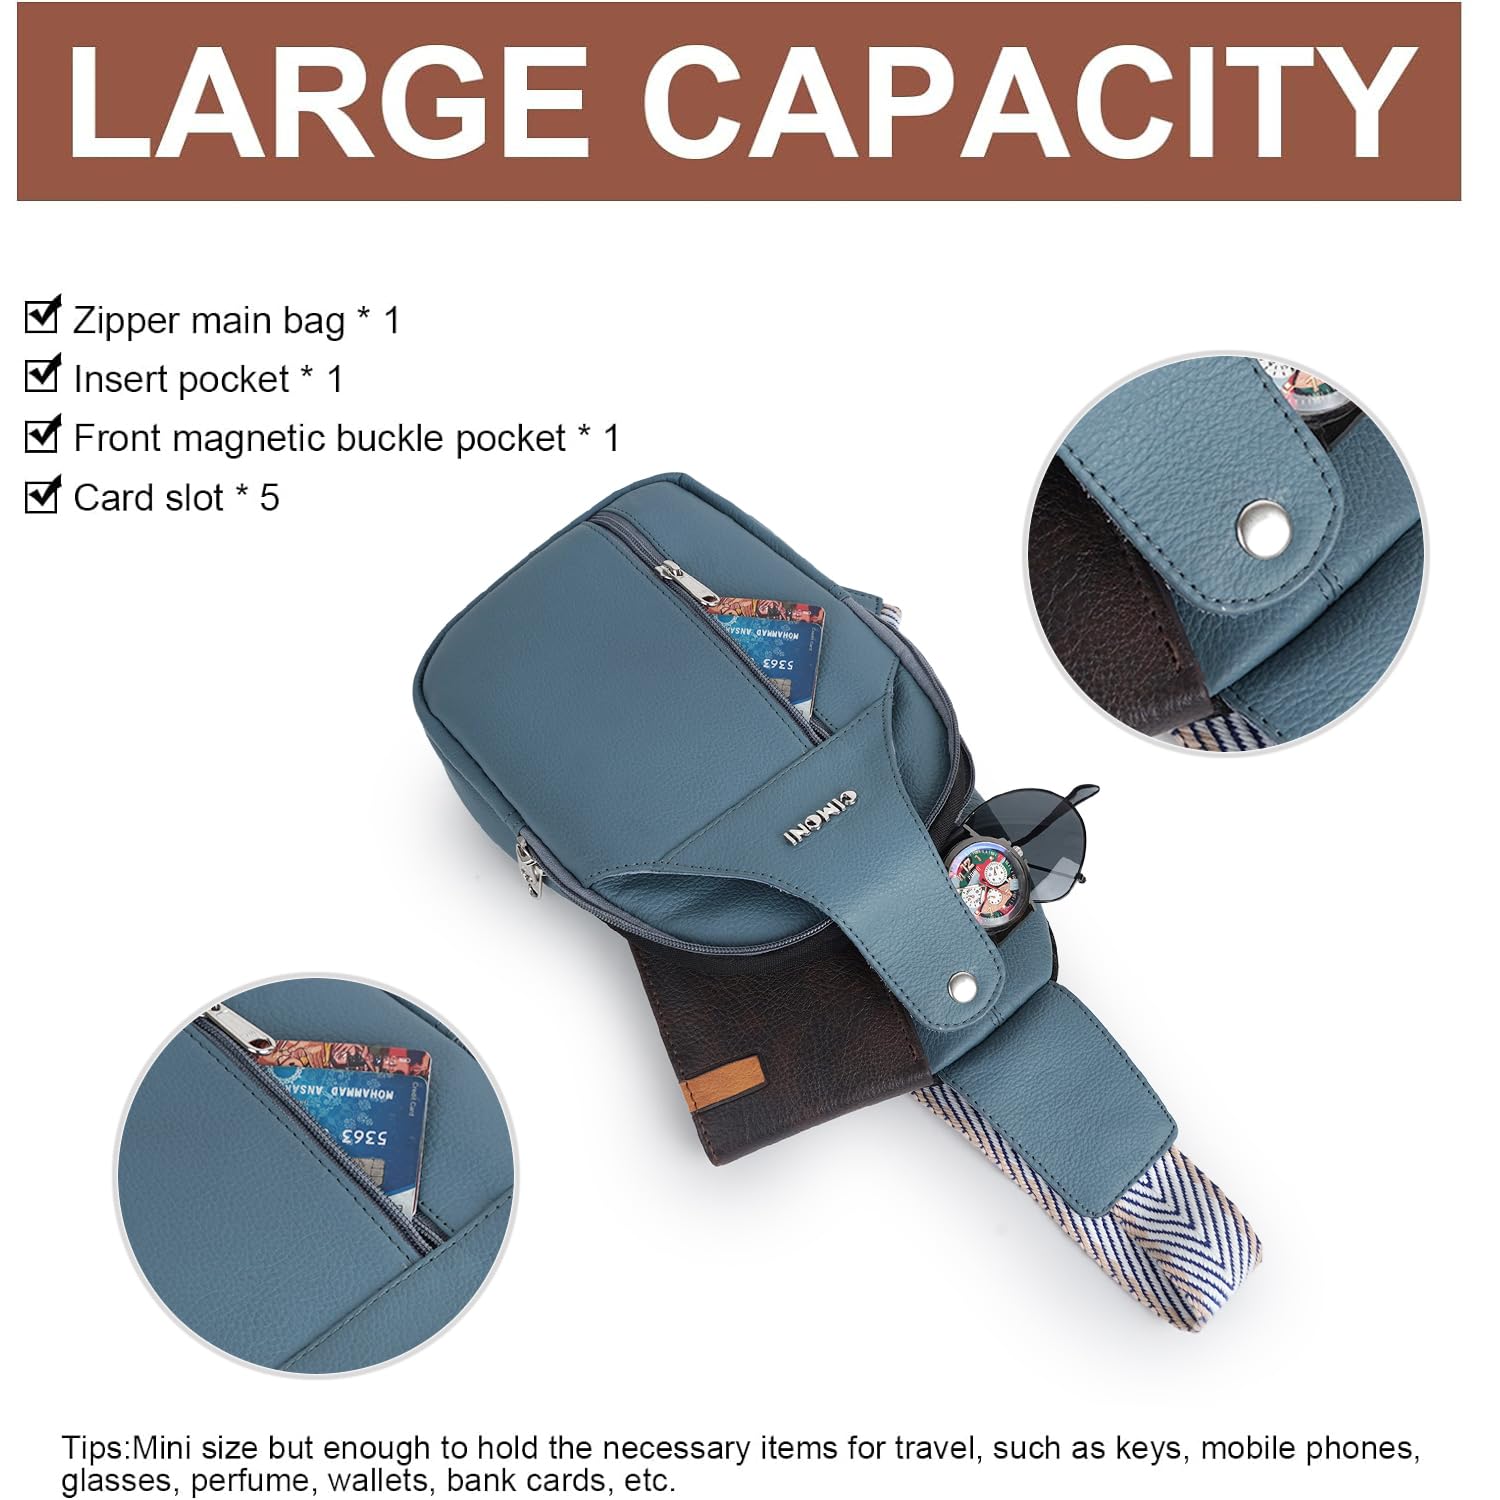 CIMONI® Premium Genuine Leather Cross Body Bag Outdoor Small Shoulder Side Purse Unisex Chest Bag External Mobile Zipper Pocket